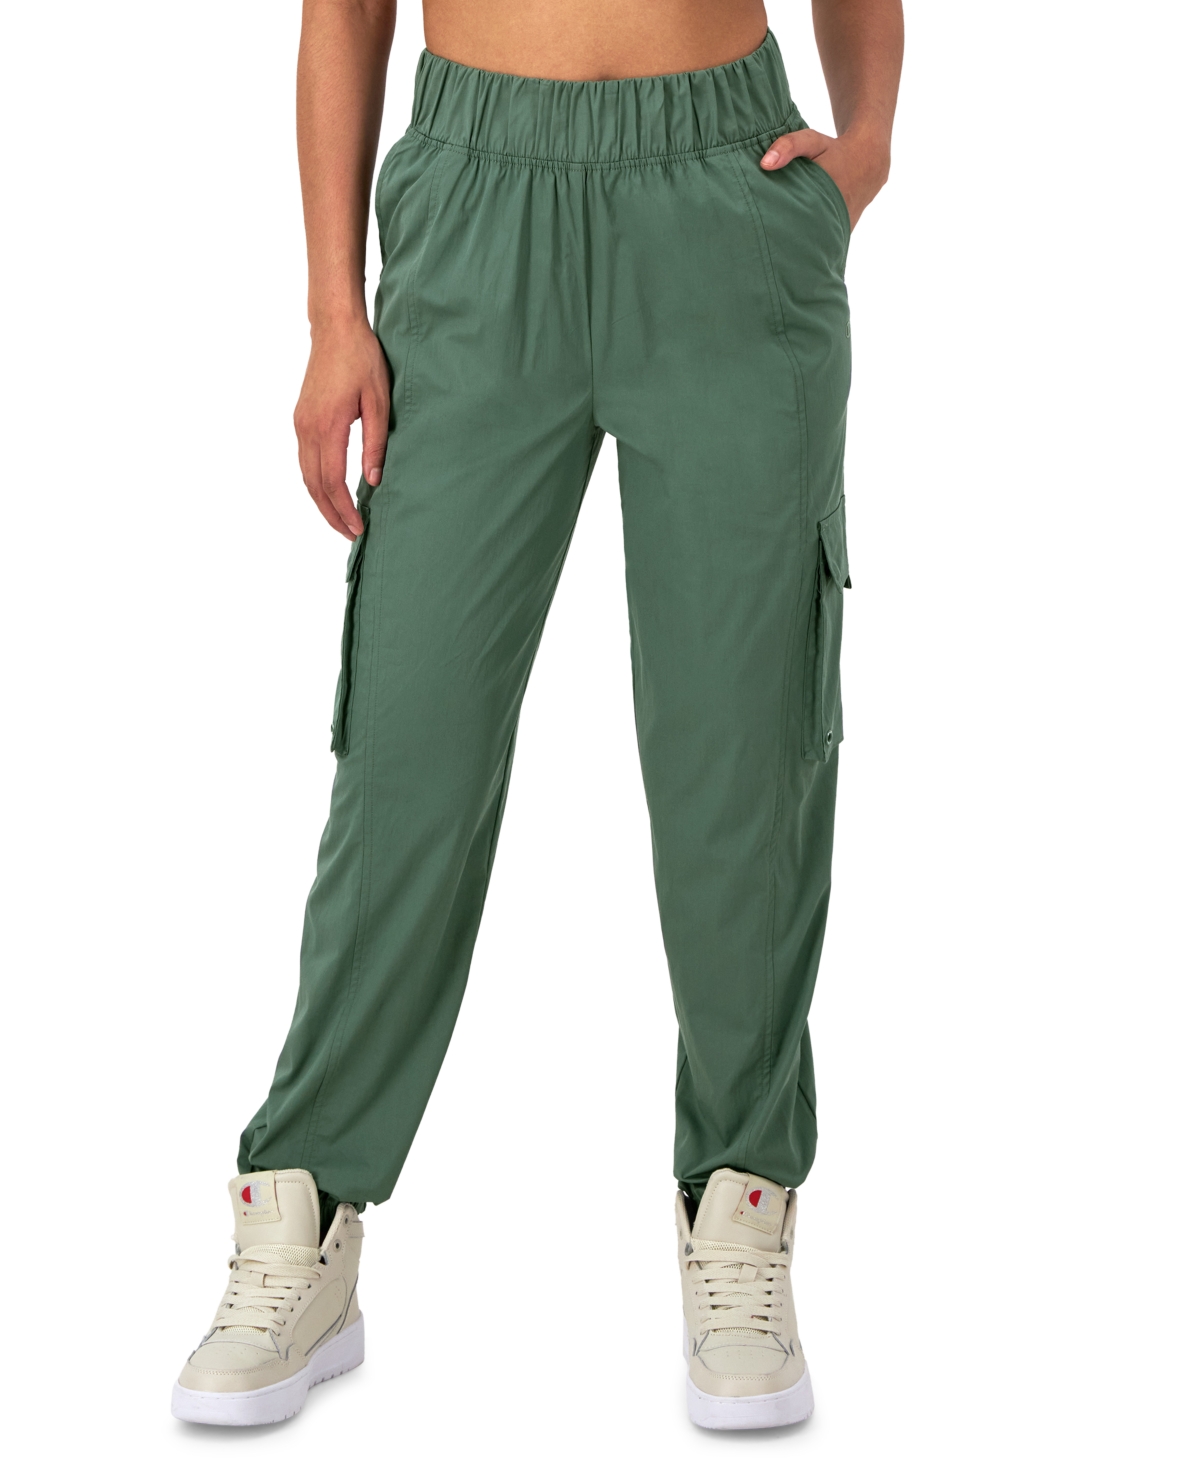 Women's Full-Length Mid-Rise Cargo Pants - Nurture Green